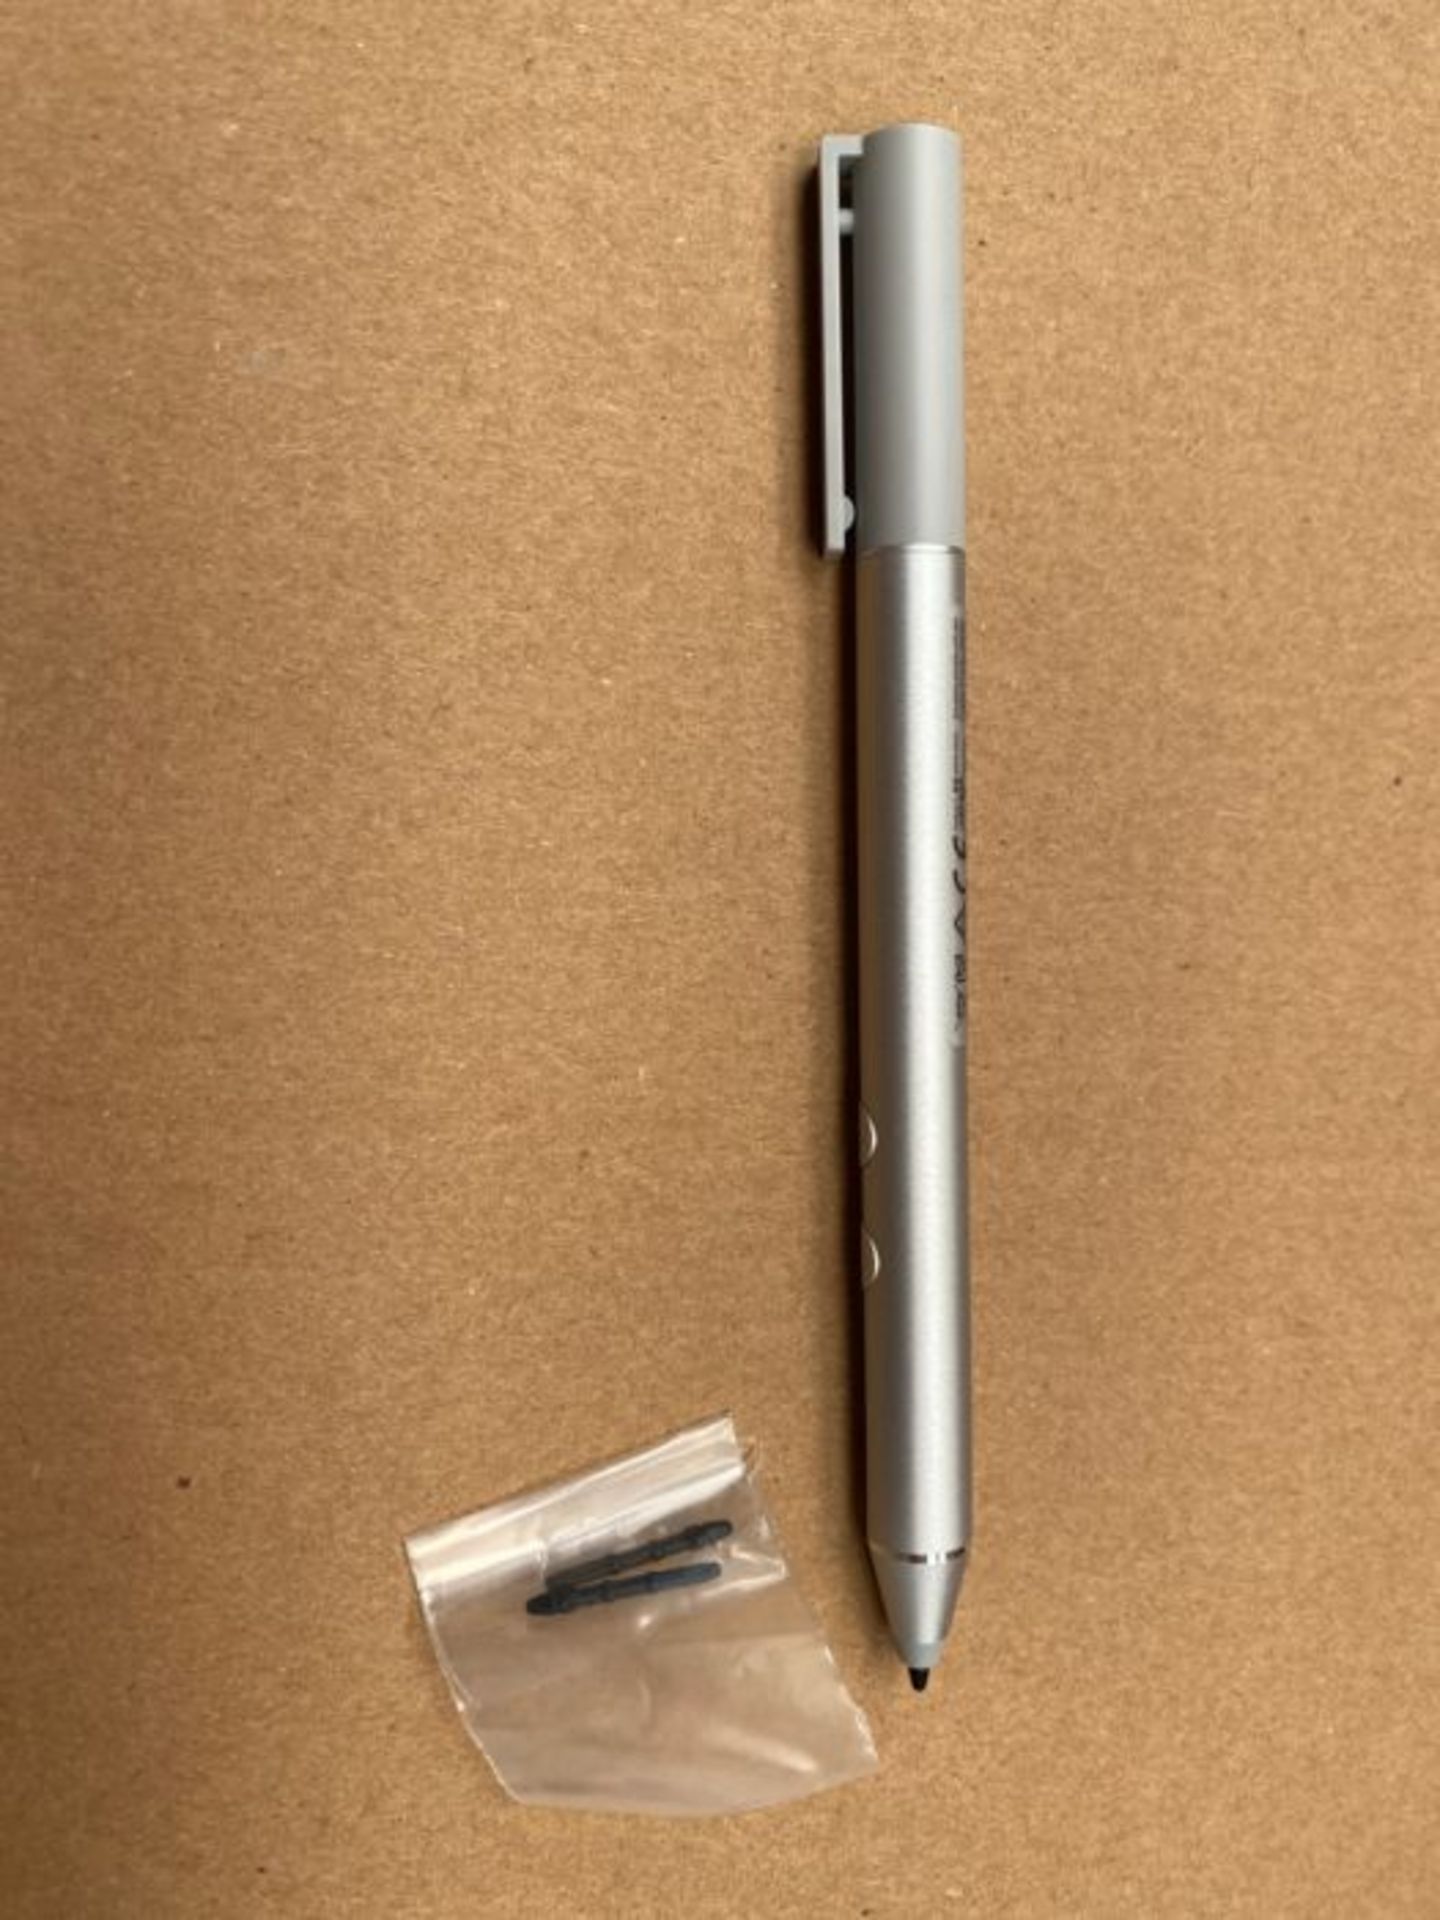 HP Pen Stylus with Pressure Sensitivity for Windows Pen Enabled Laptops, 18-Month Batt - Image 3 of 3